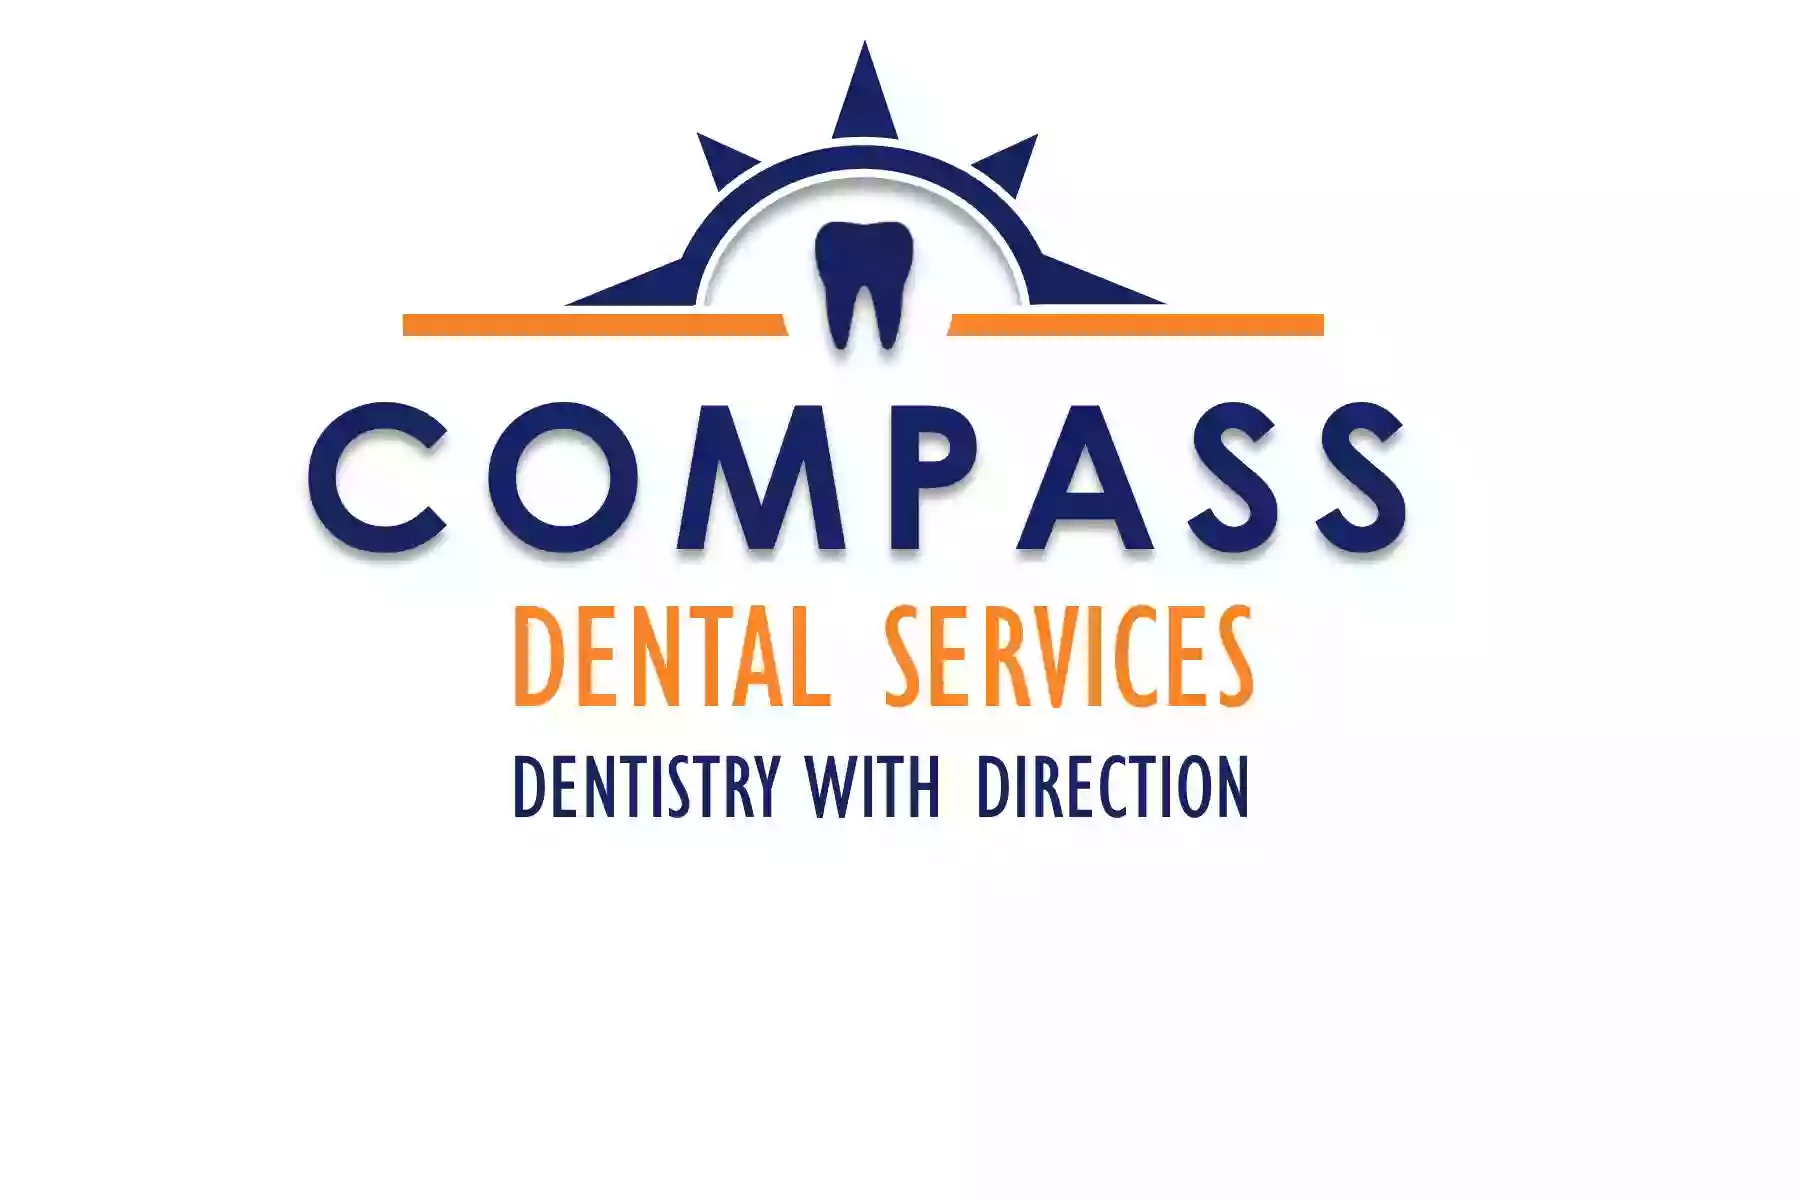 Compass Dental